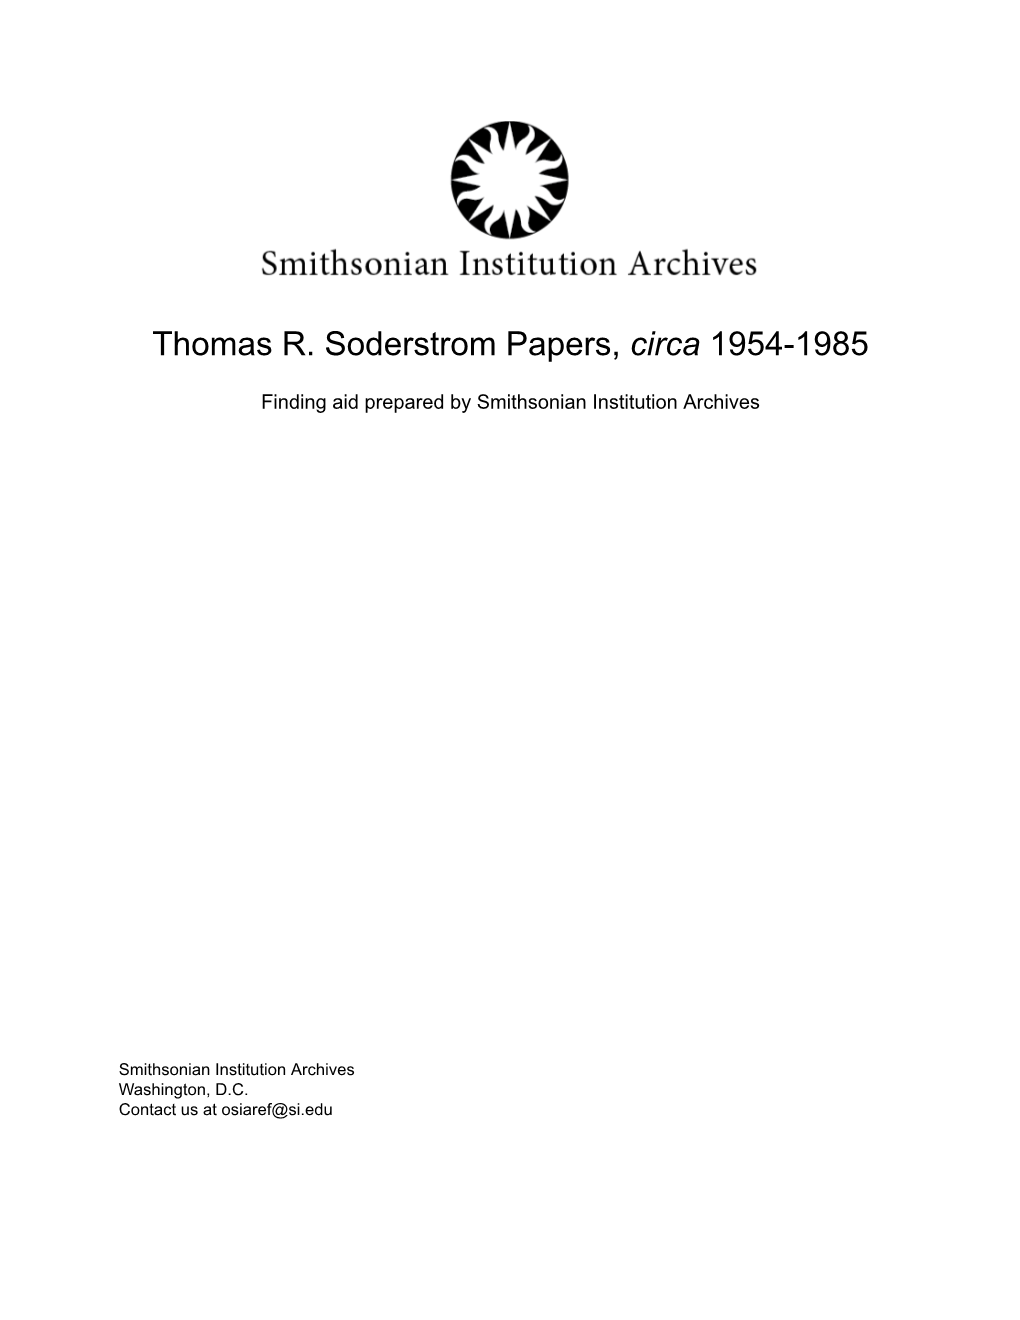 Thomas R. Soderstrom Papers, Circa 1954-1985